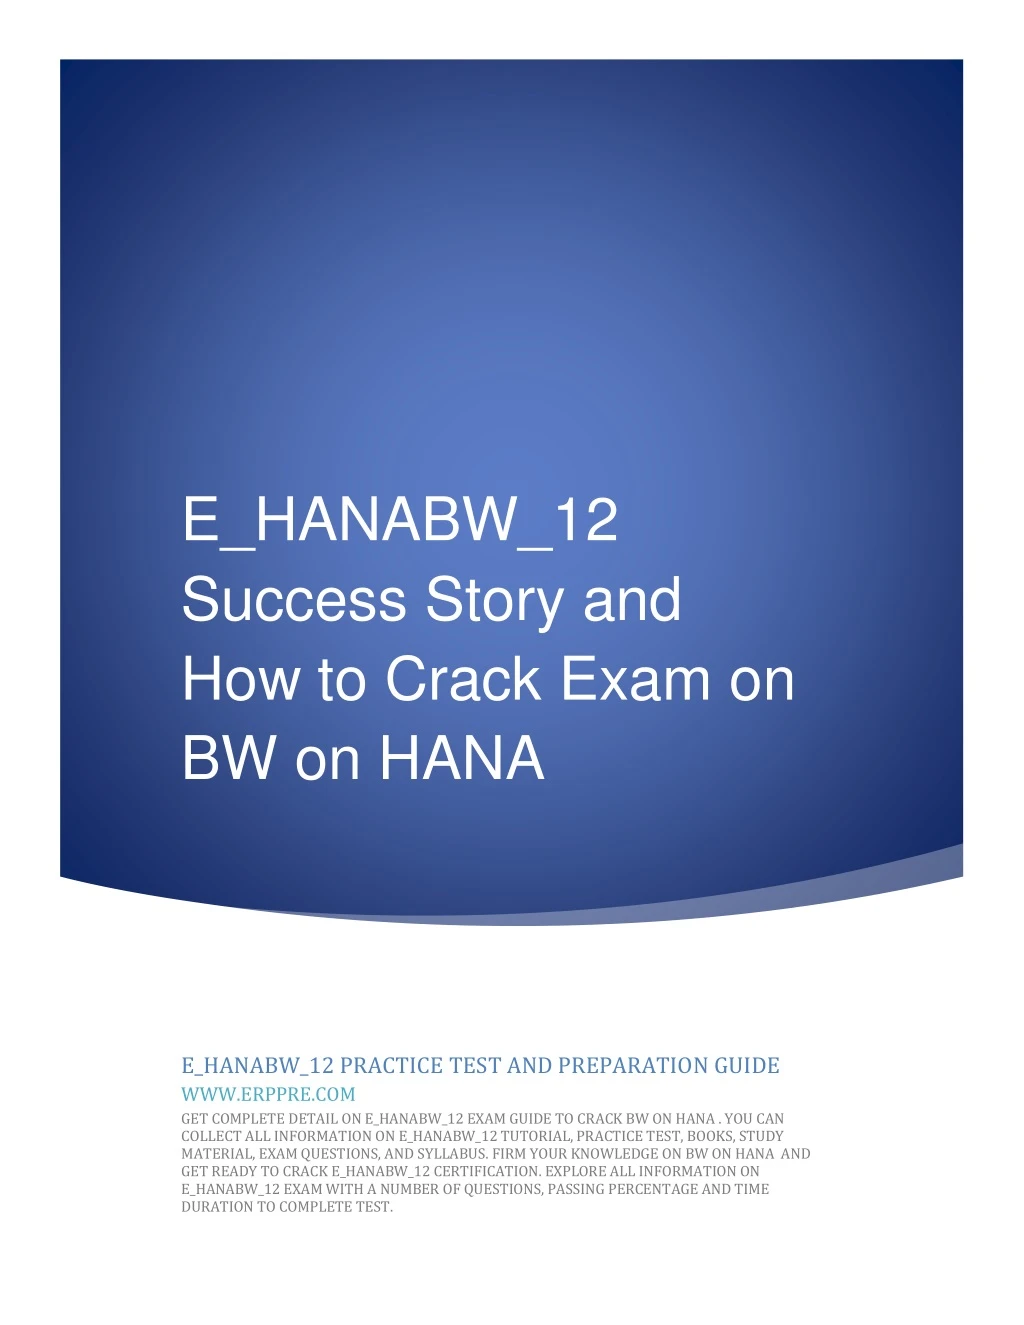 e hanabw 12 success story and how to crack exam